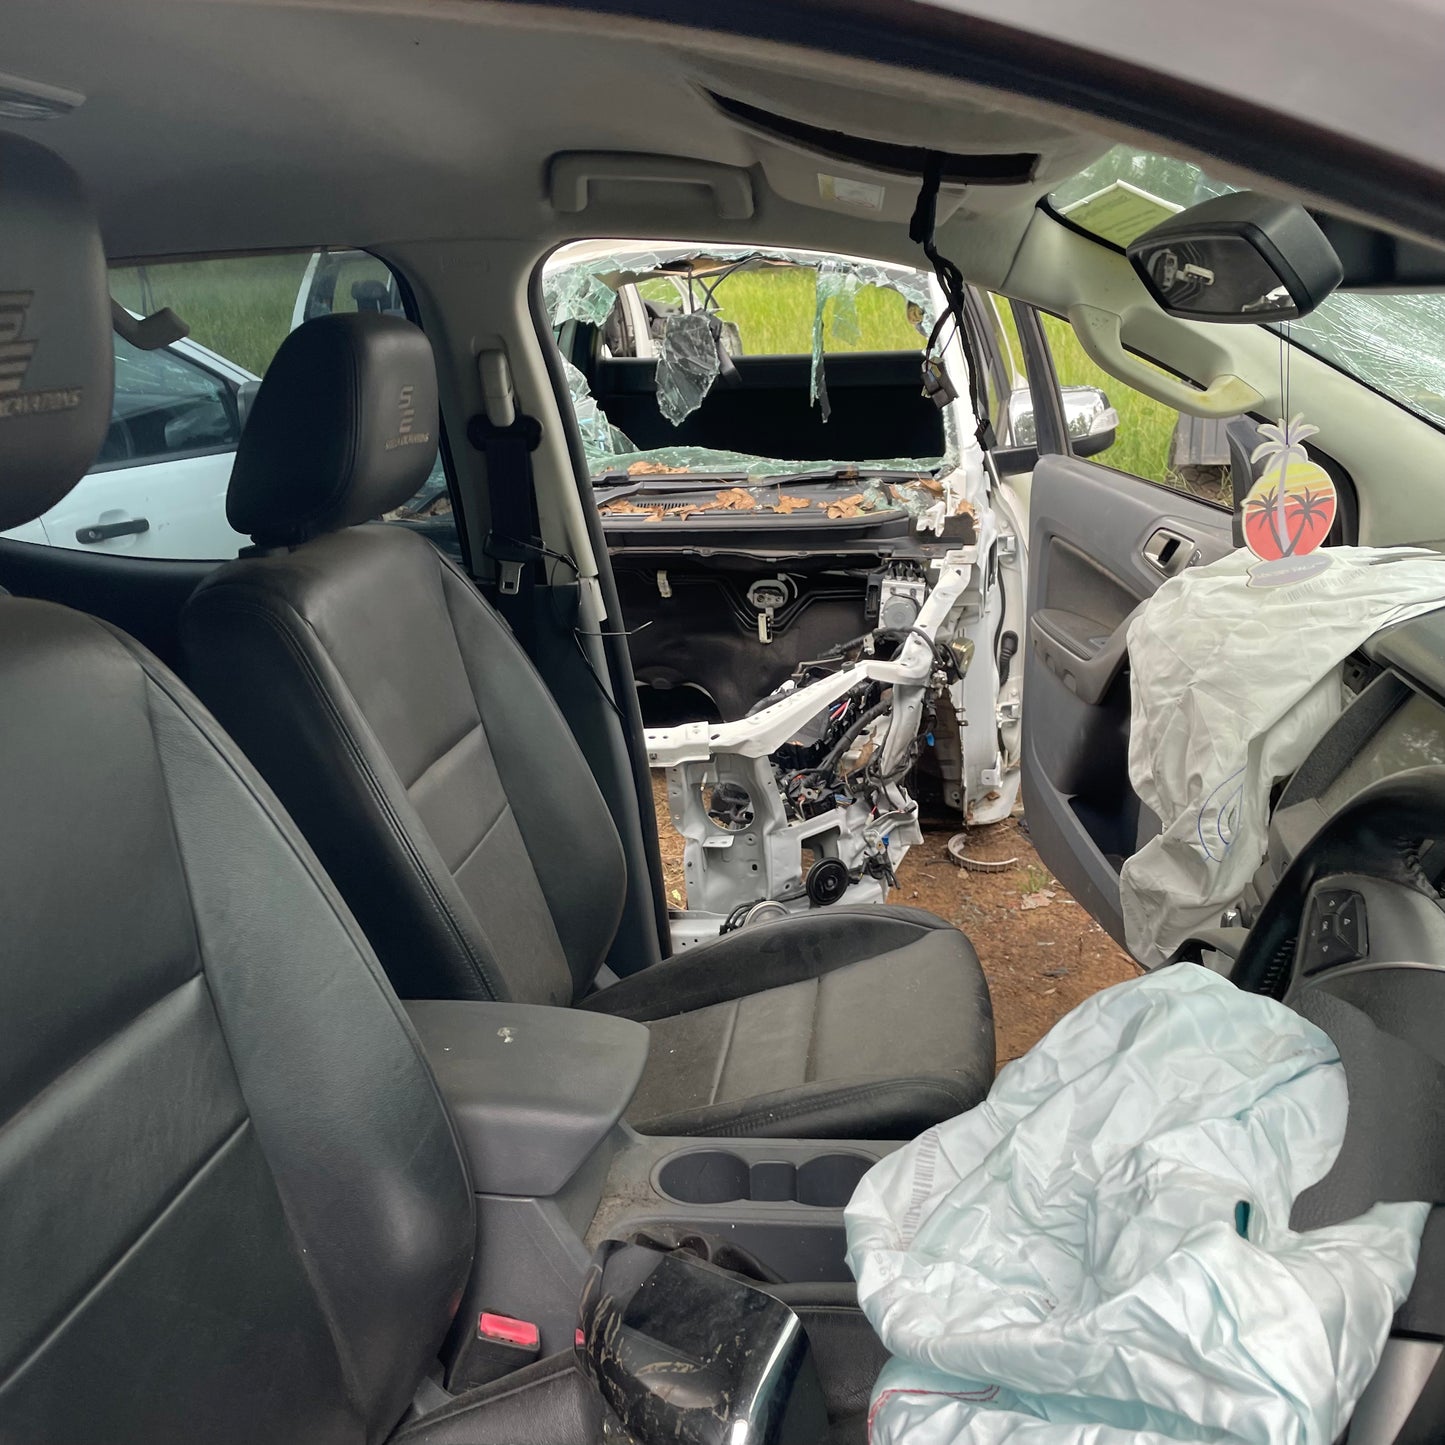 Ford Ranger 4x4 XLT Double Cab 2017 3.2L Diesel Automatic Transmission